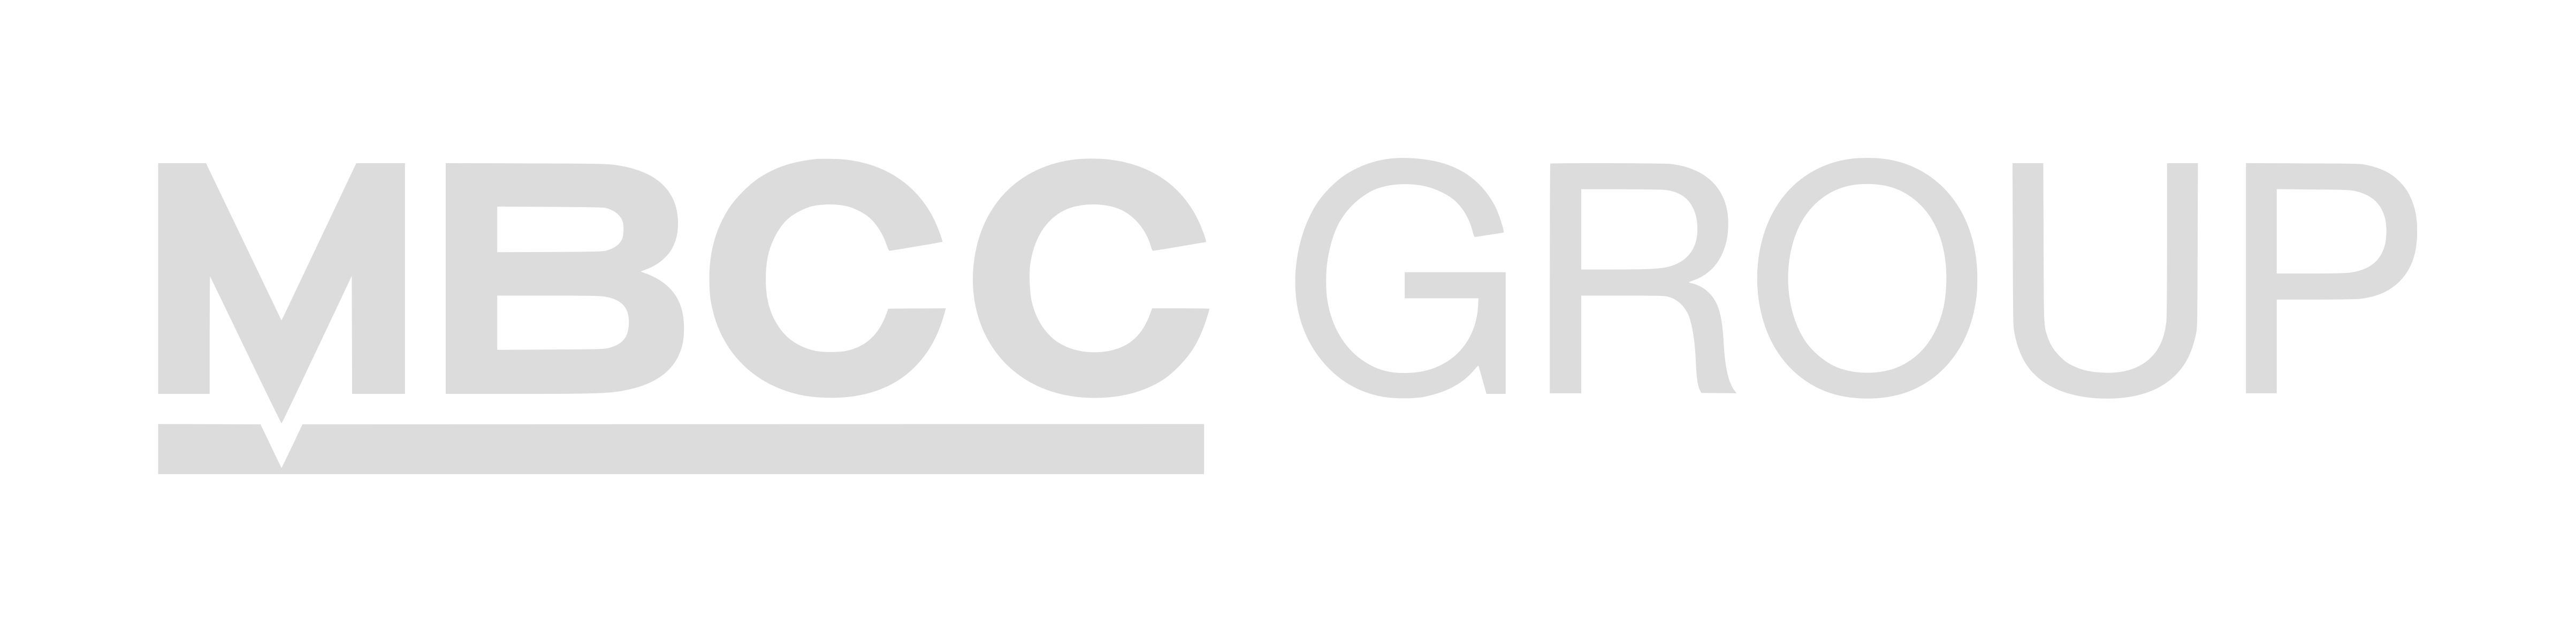 mbcc-group-logo-grey